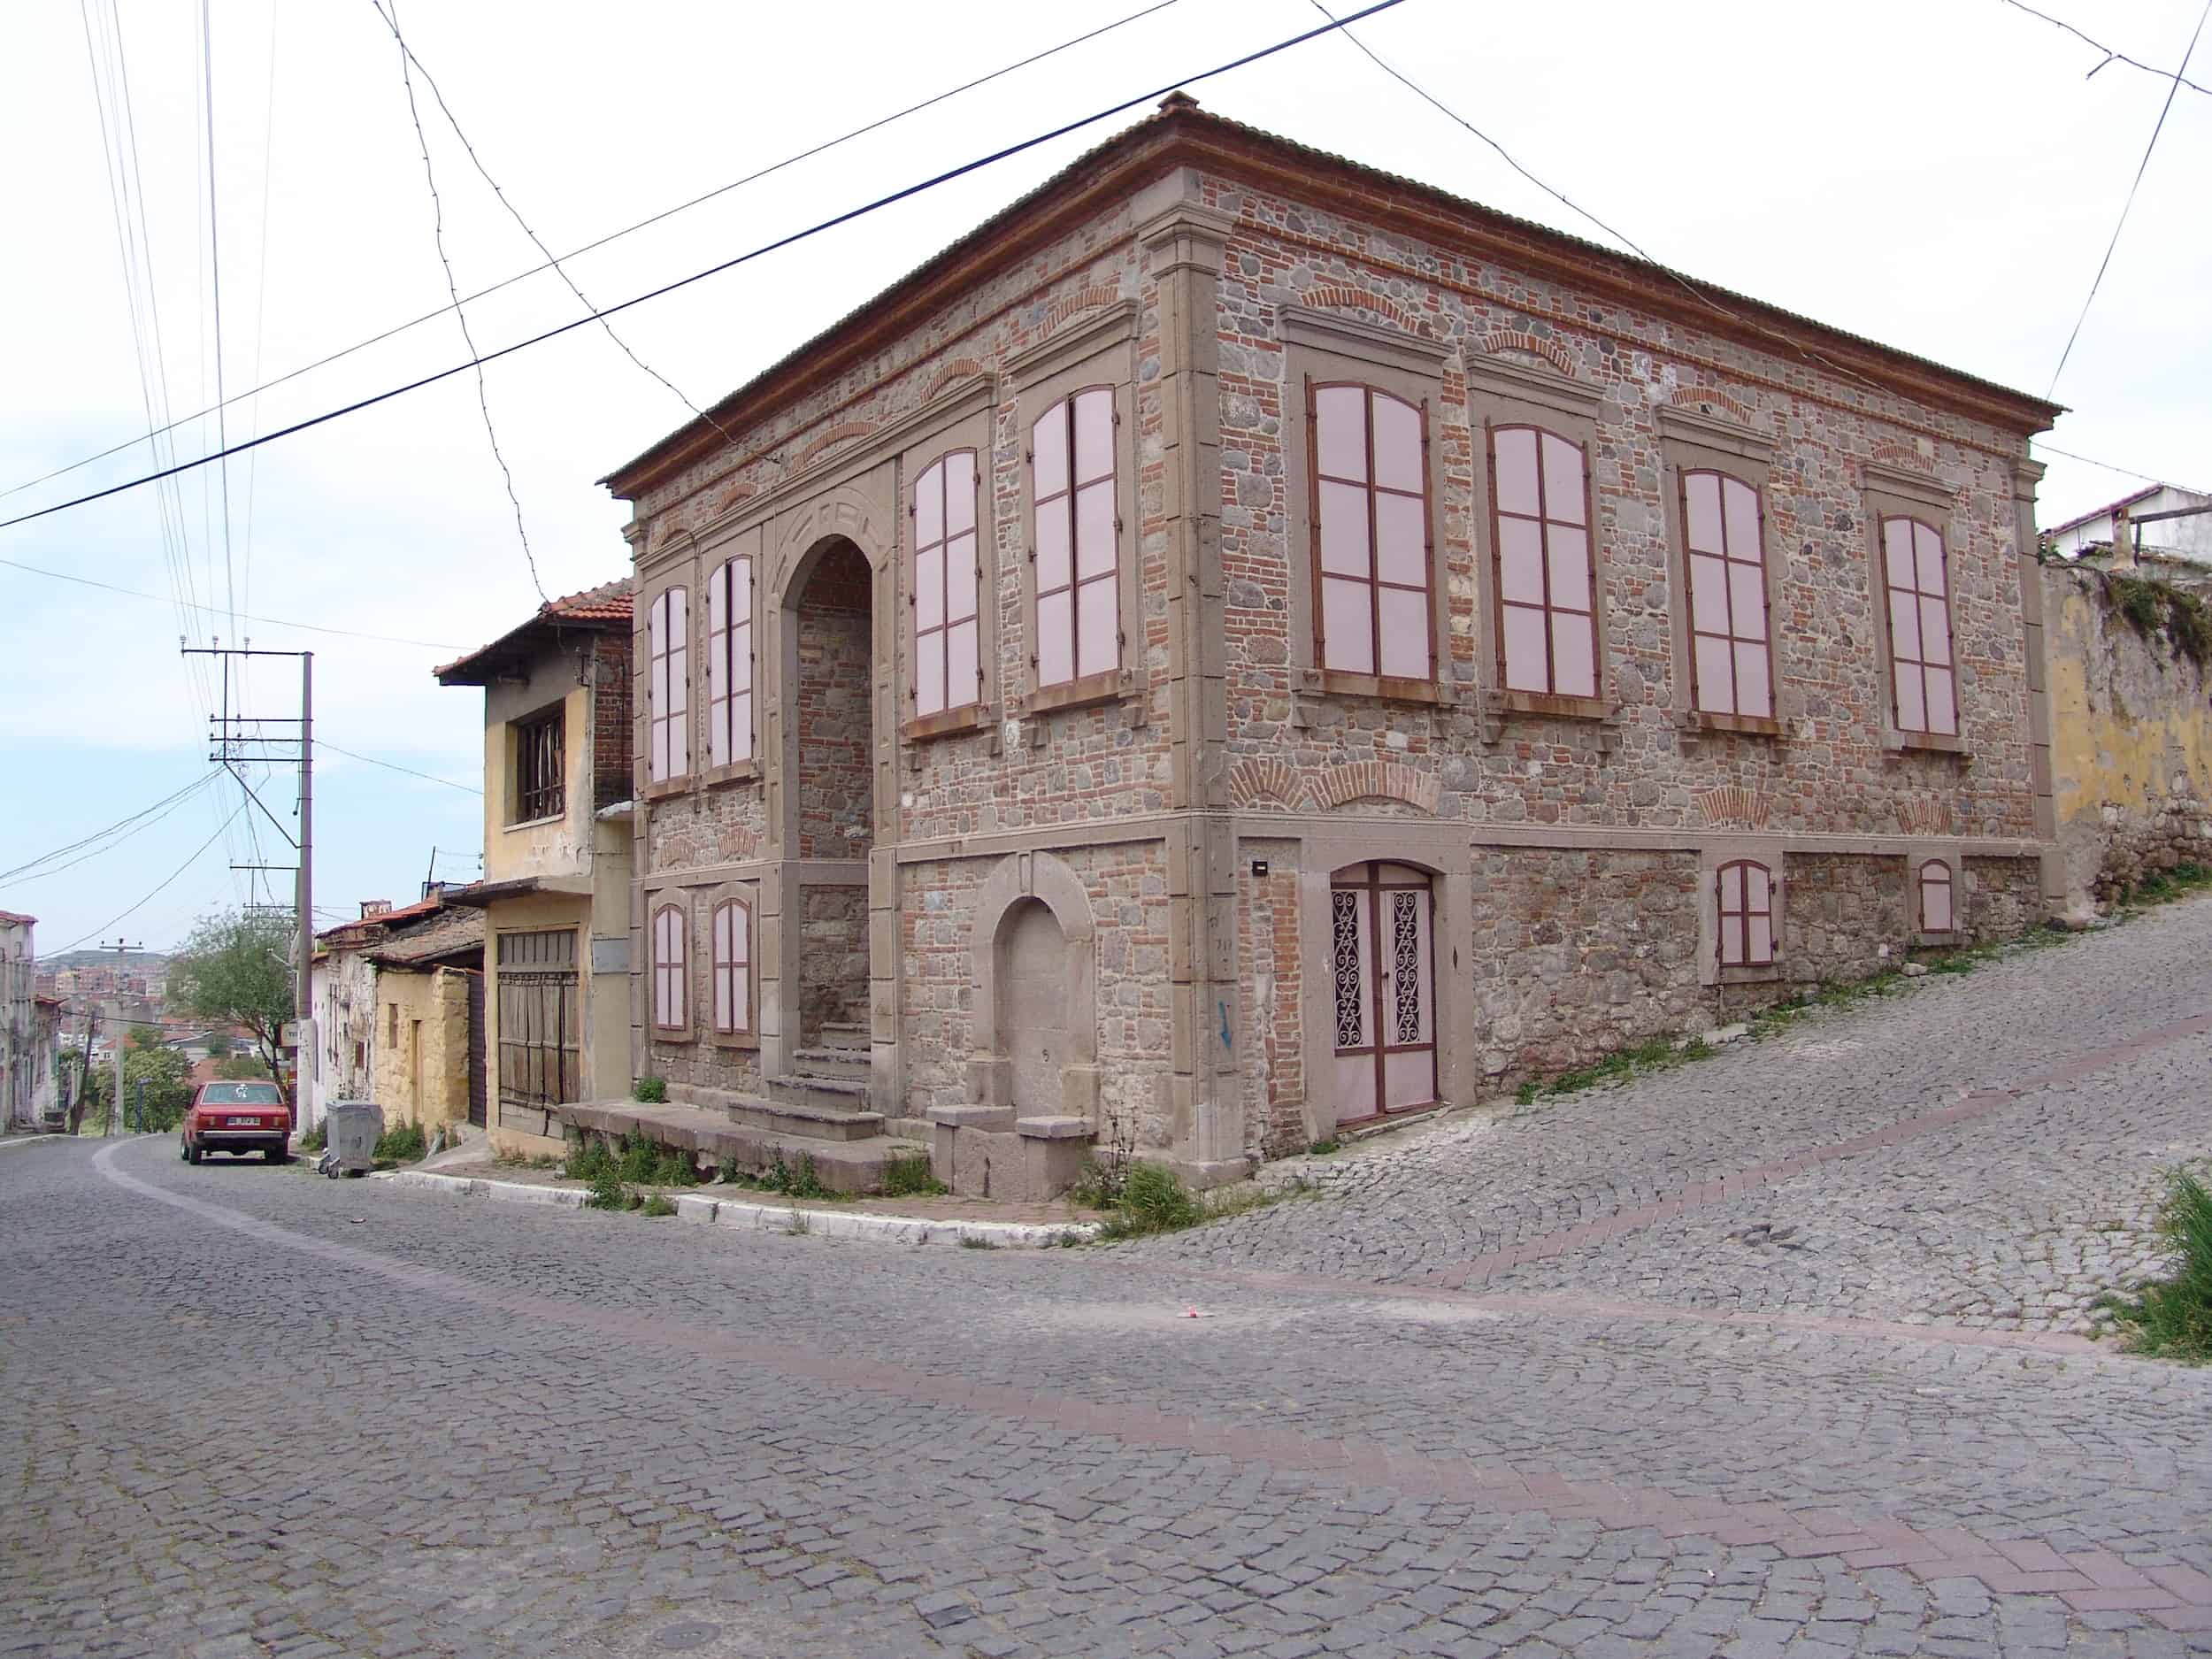 Restored stone building in Bergama, Turkey